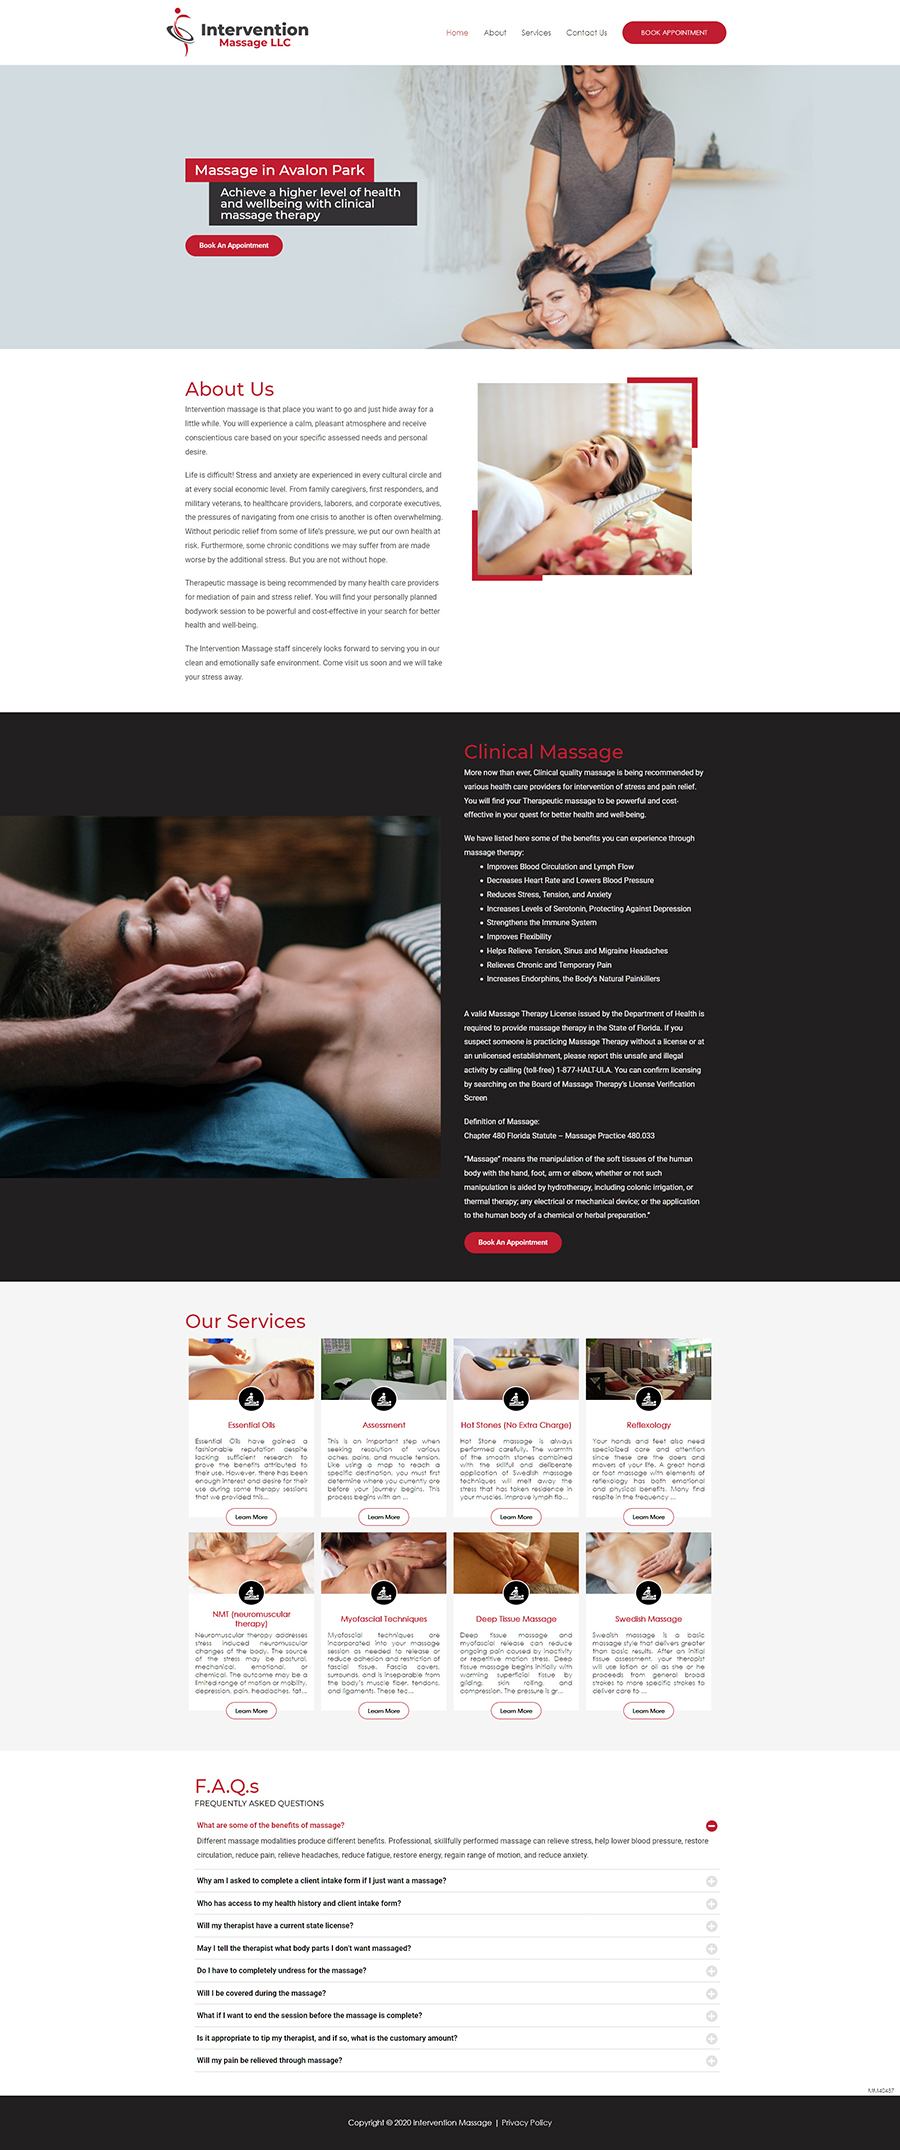 Intervention Massage- branding sample 1